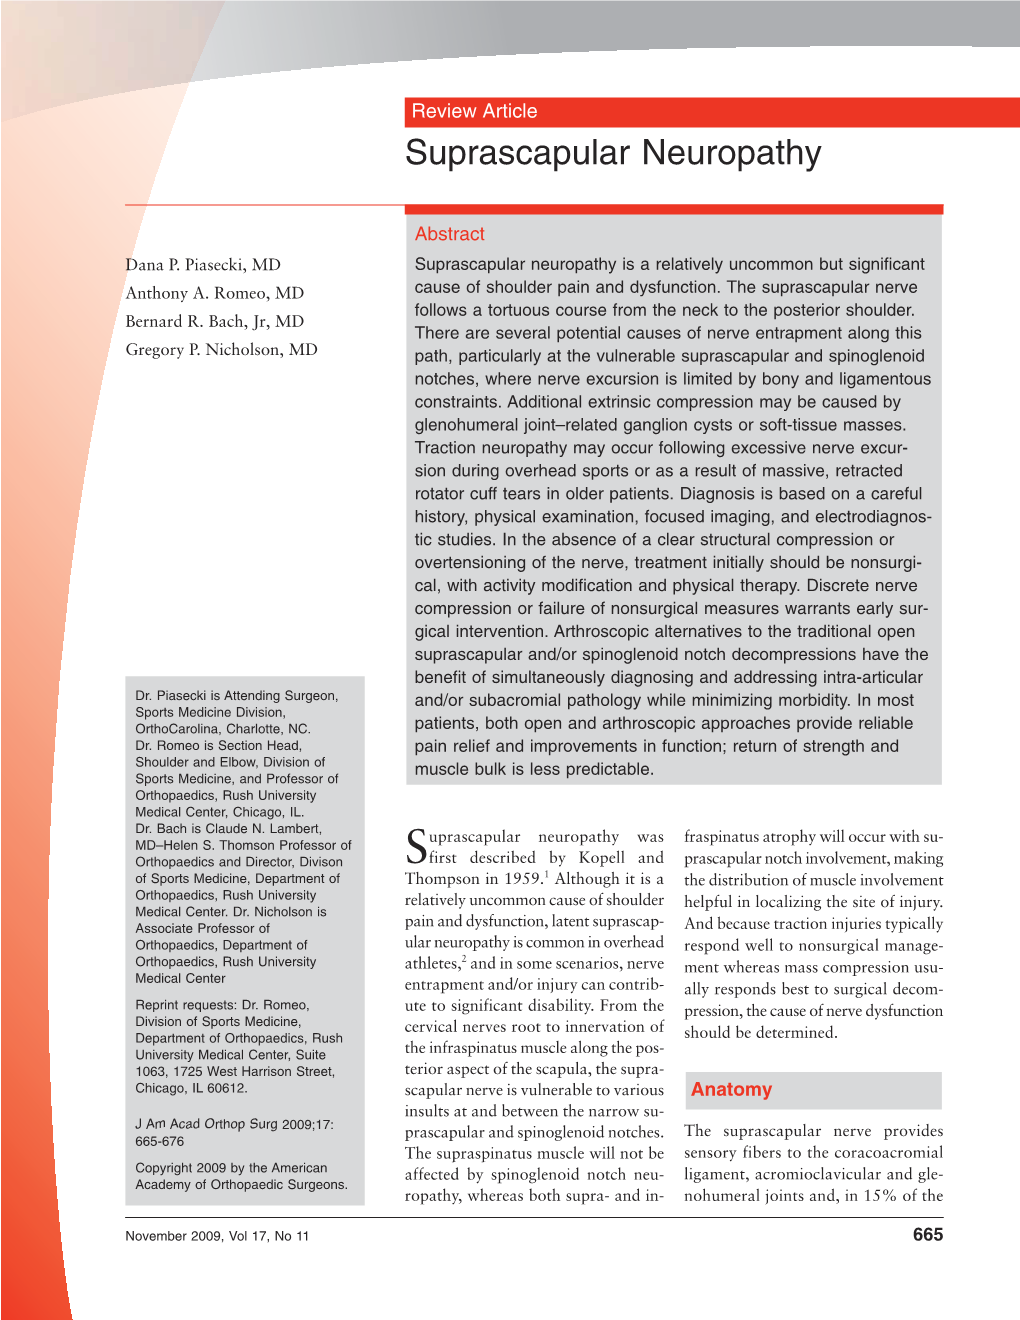 Suprascapular Neuropathy